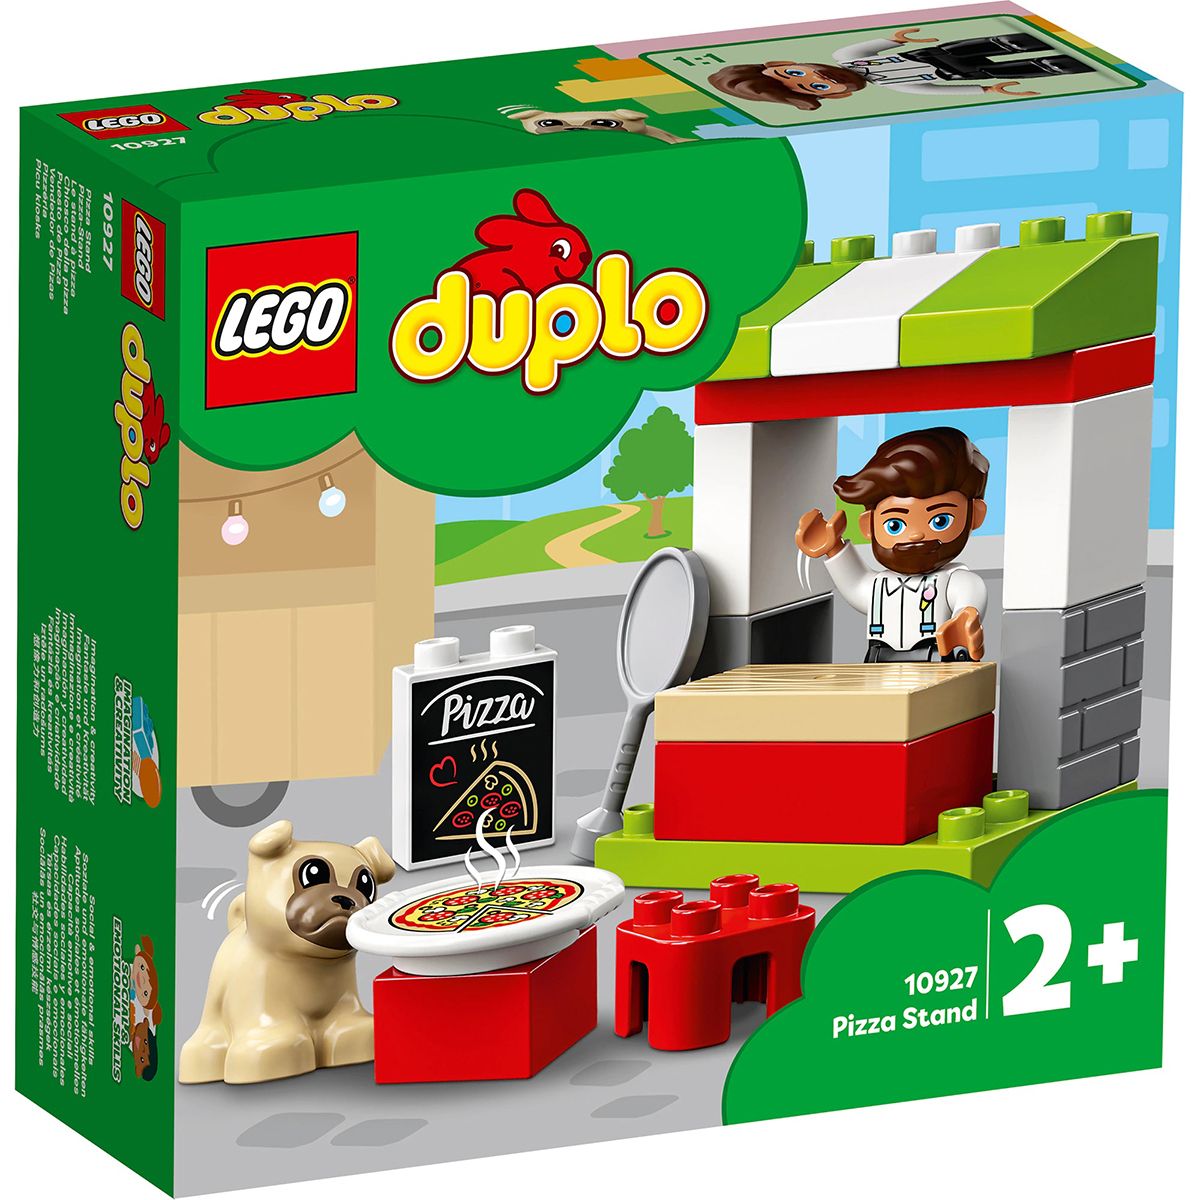 Stand cu pizza Lego Duplo, +2 ani, 10927, Lego